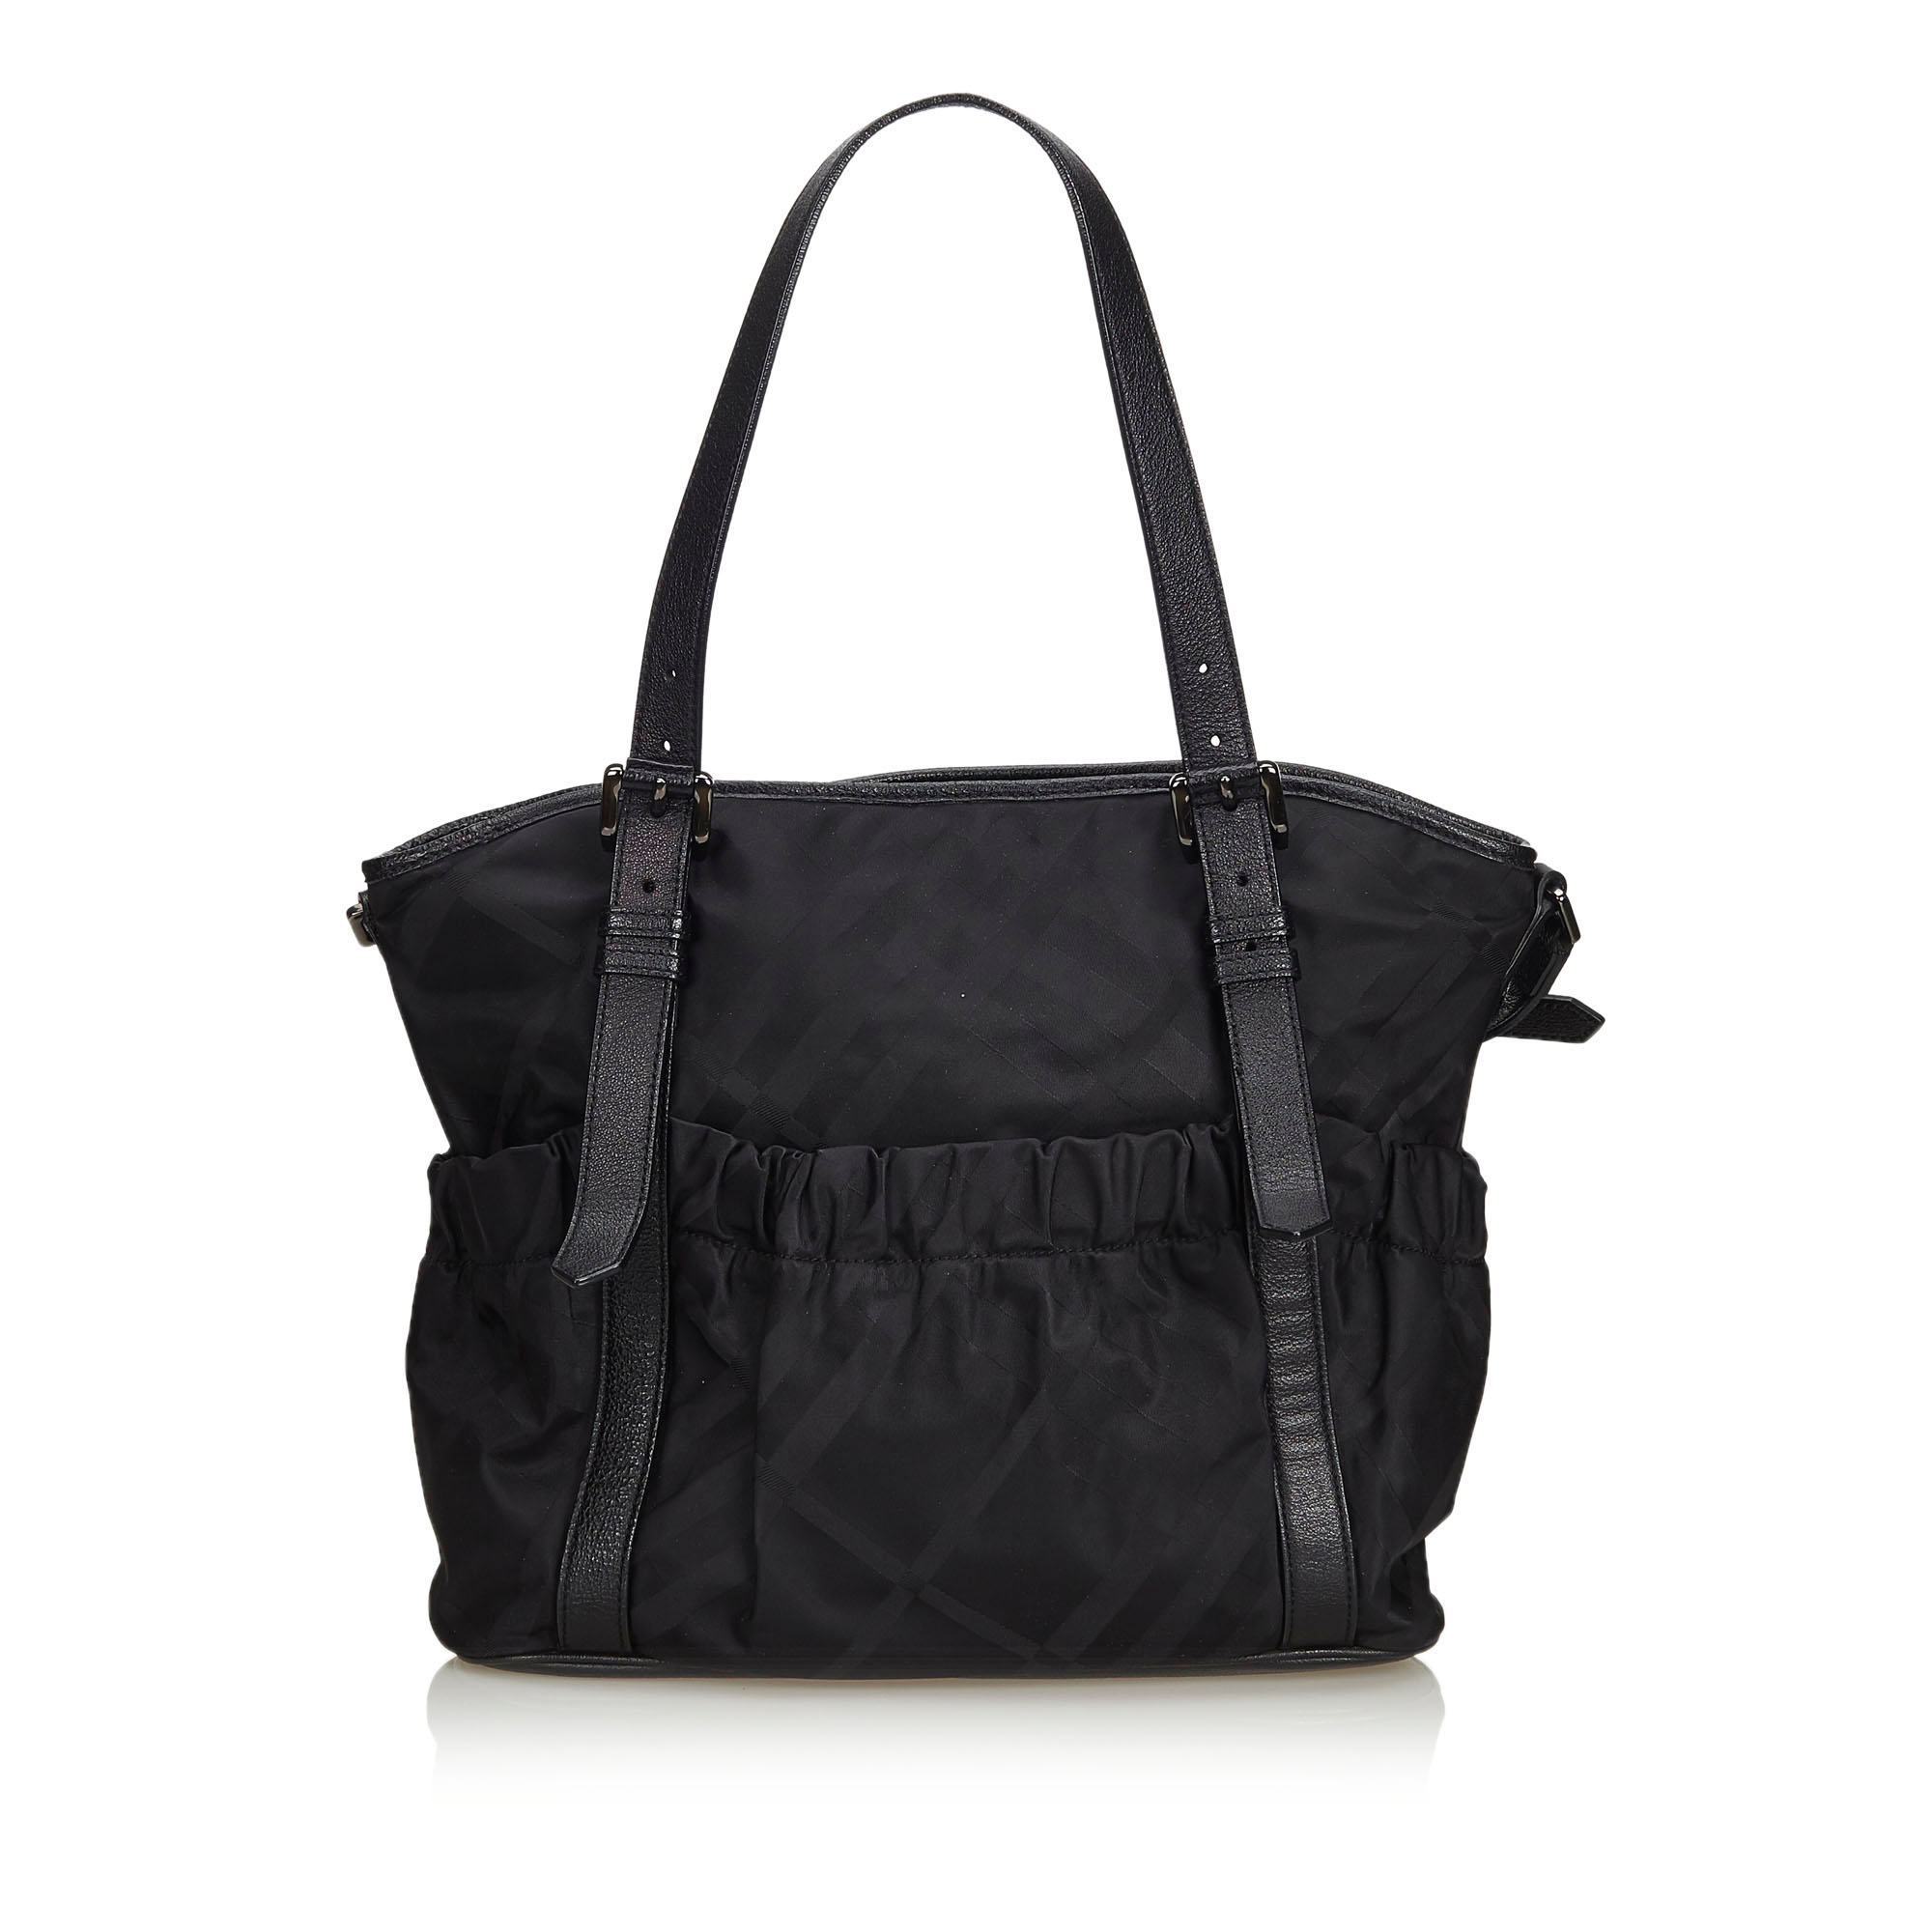 burberry satchel handbag